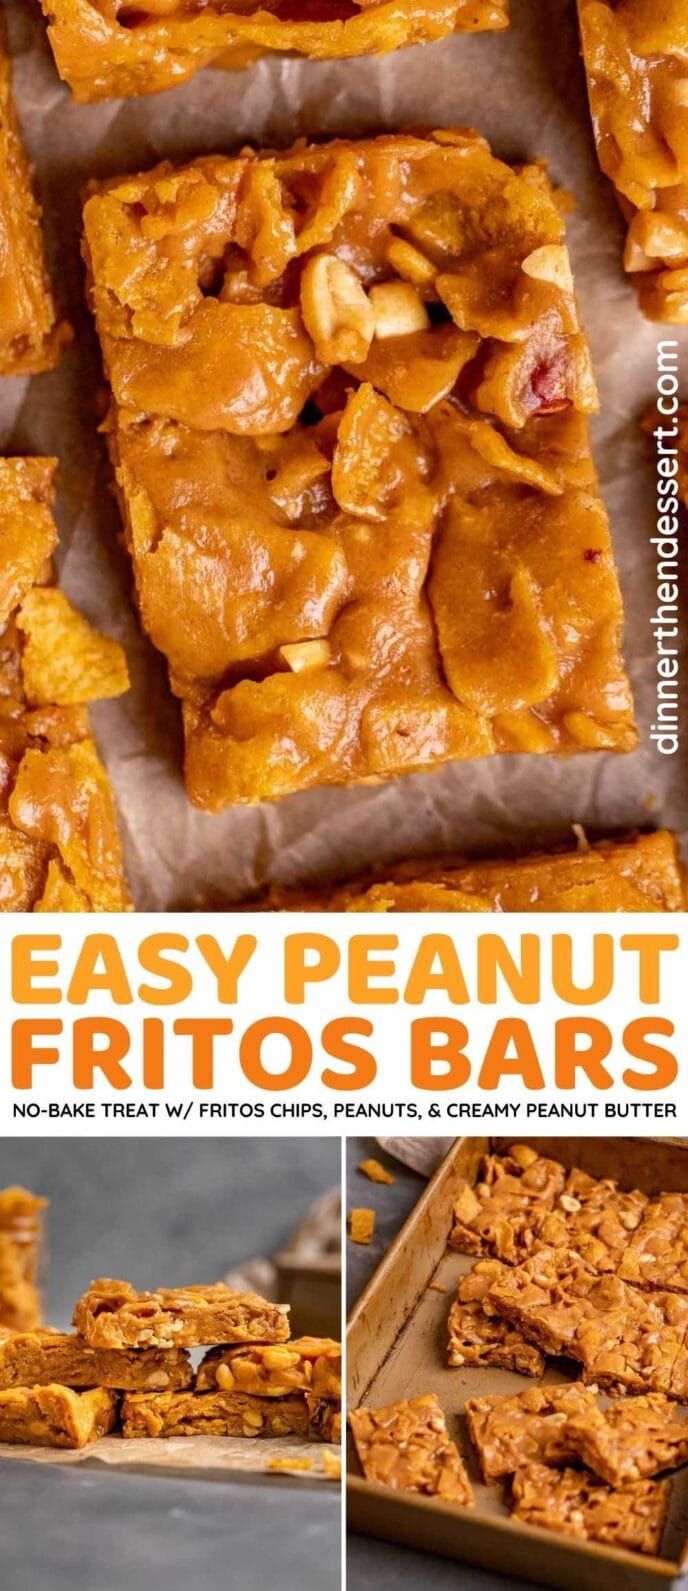 Peanut Fritos Bars collage